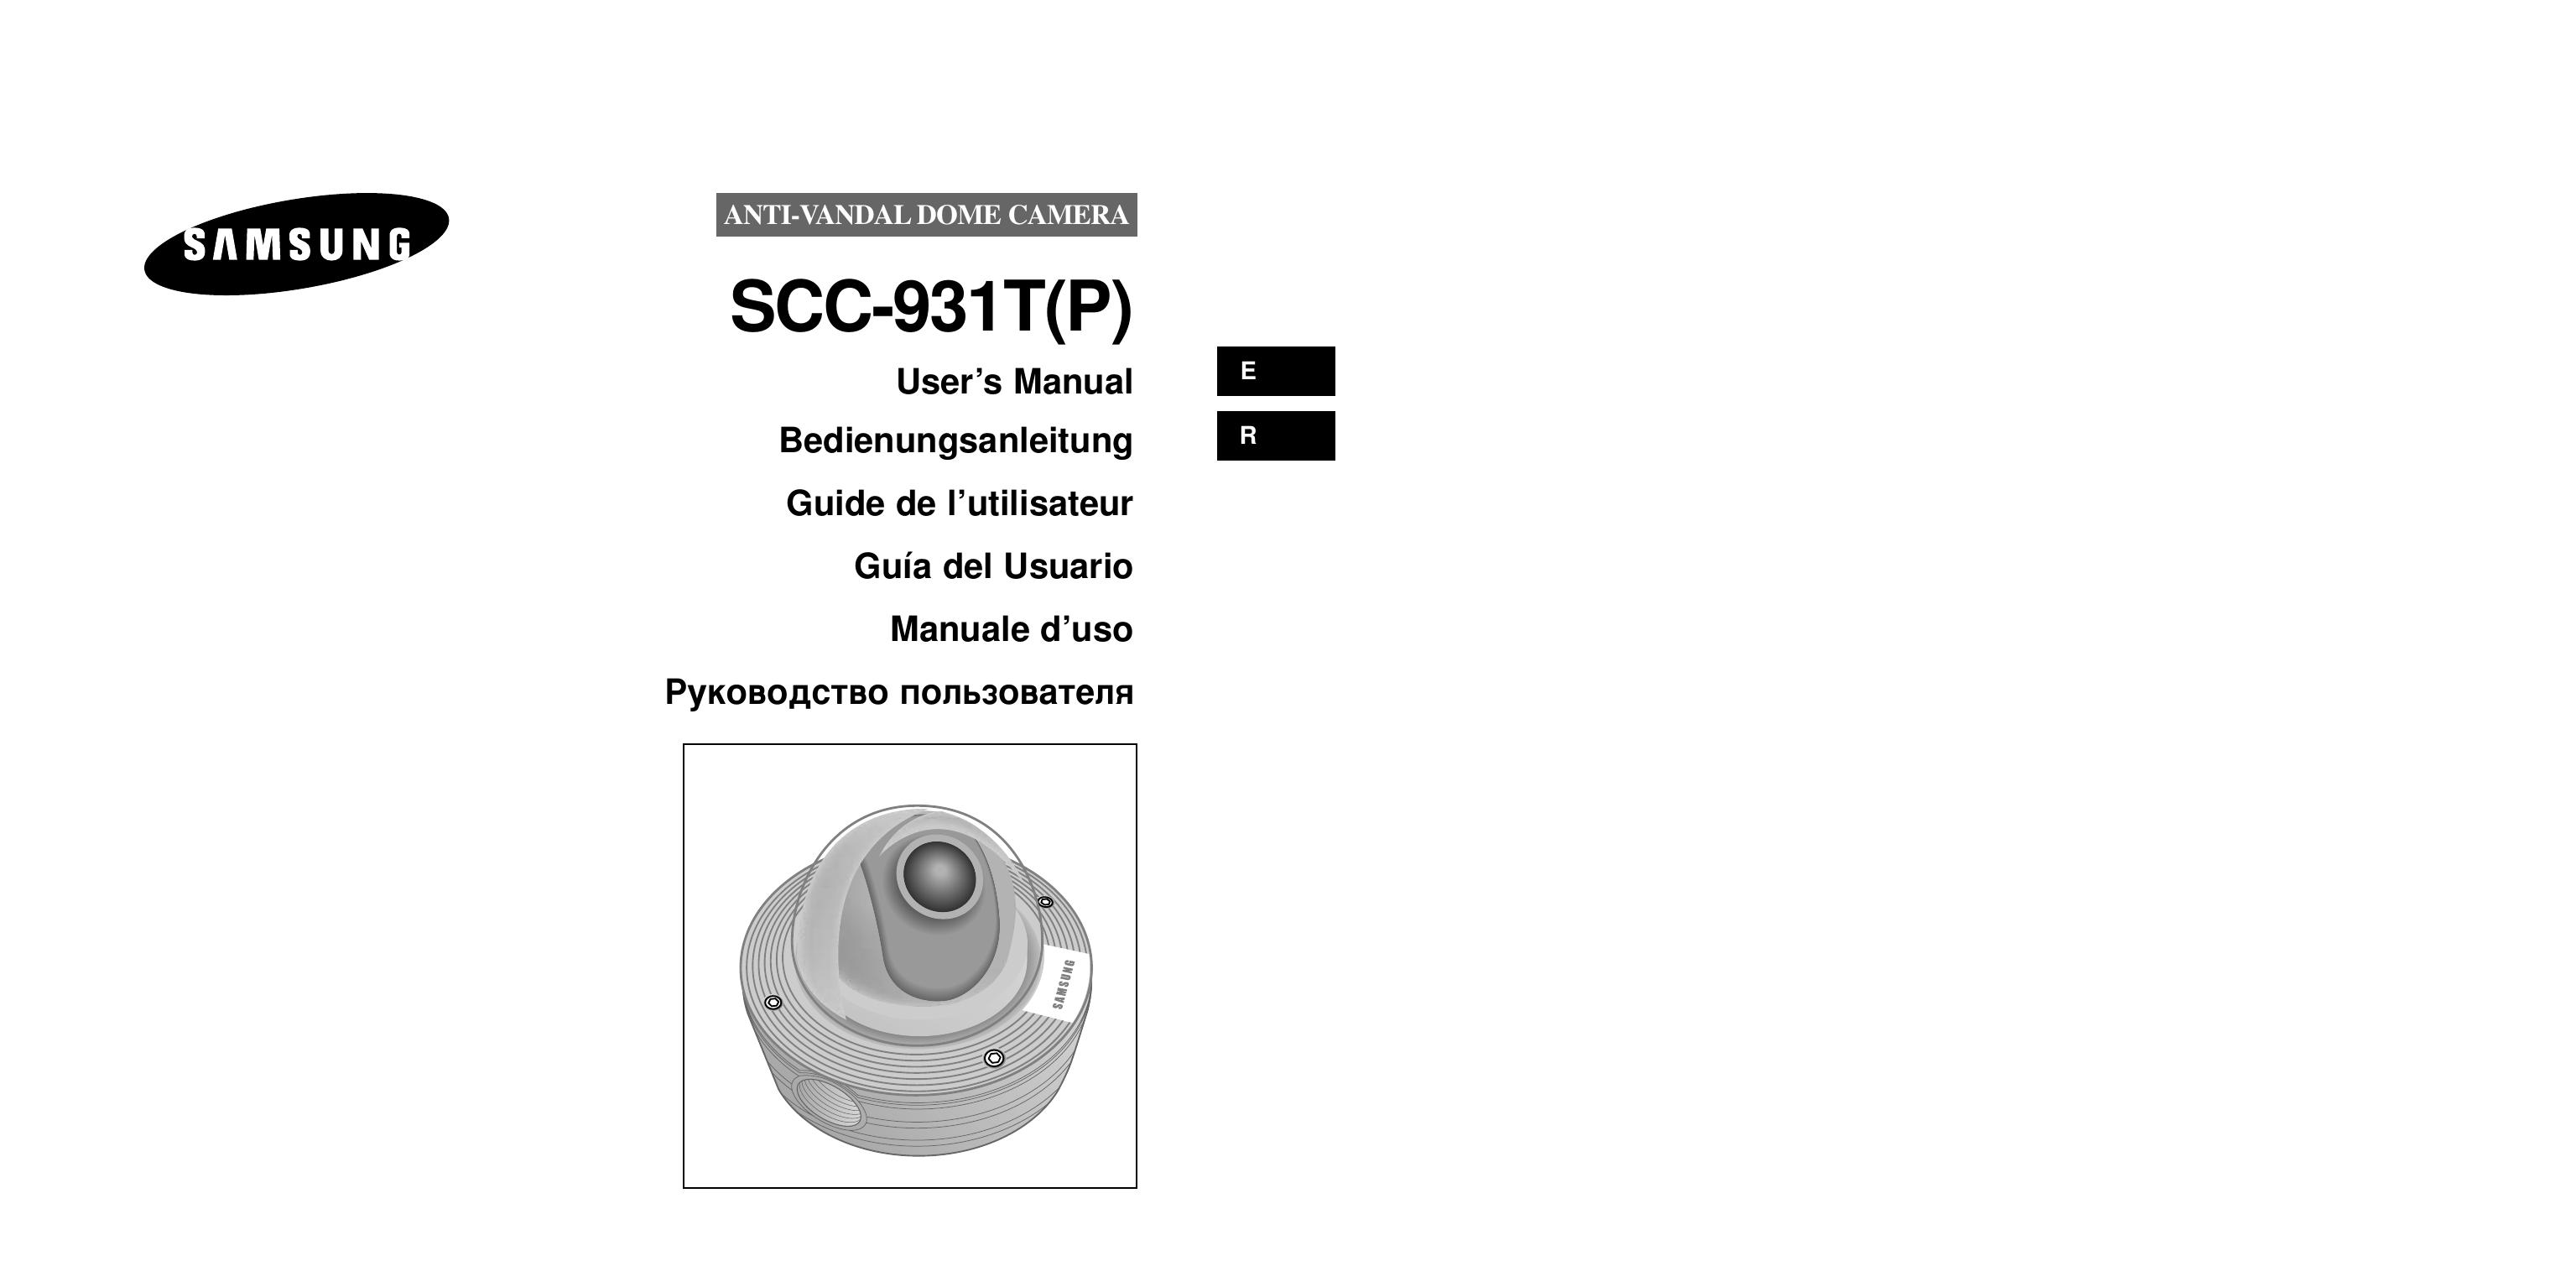 Samsung SCC-931TP Security Camera User Manual